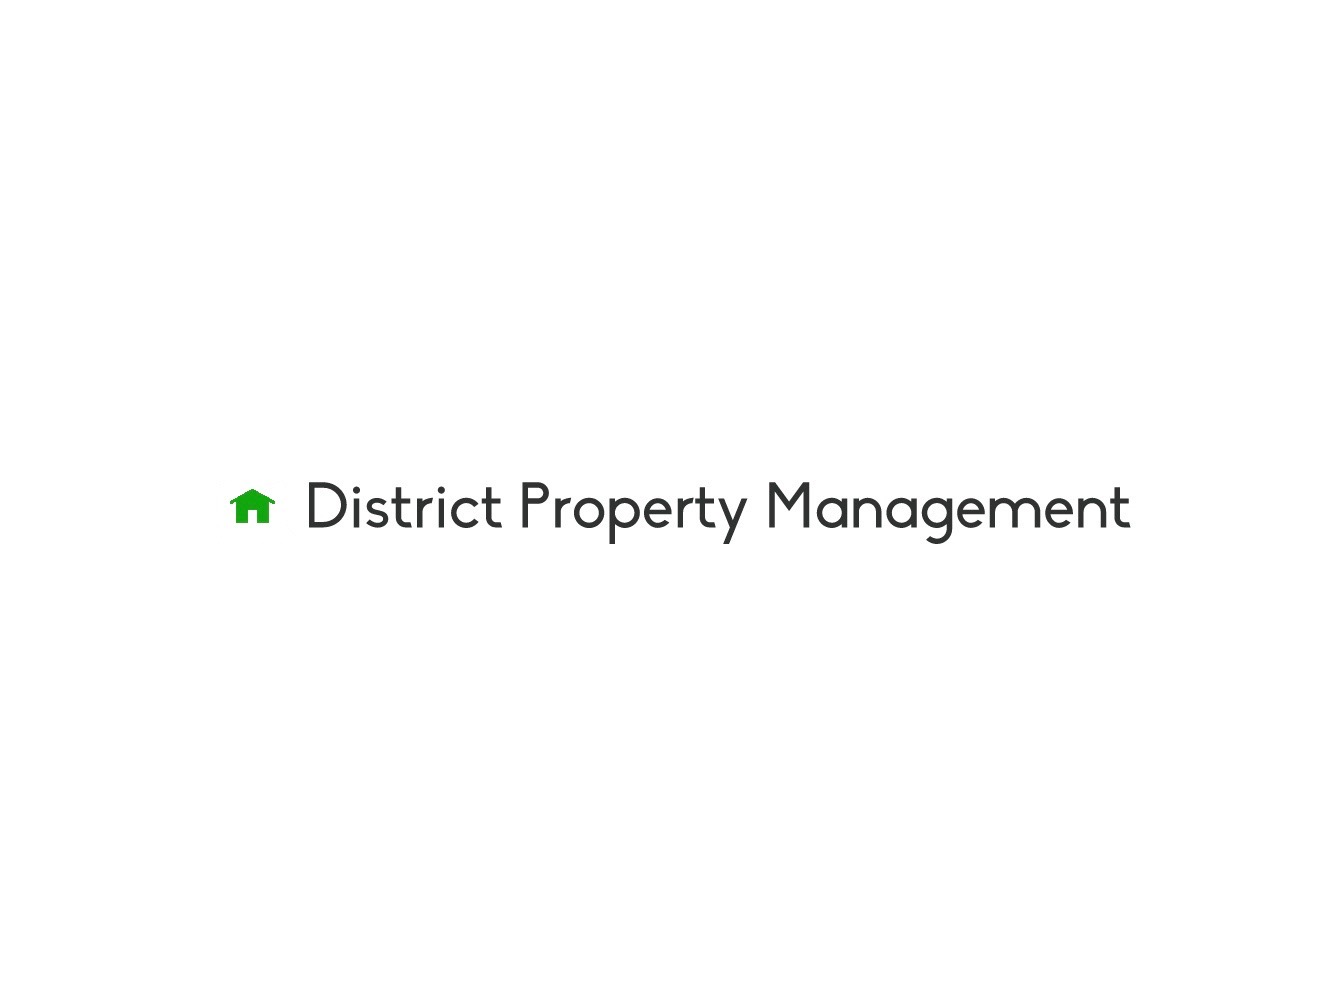 District Property Management logo